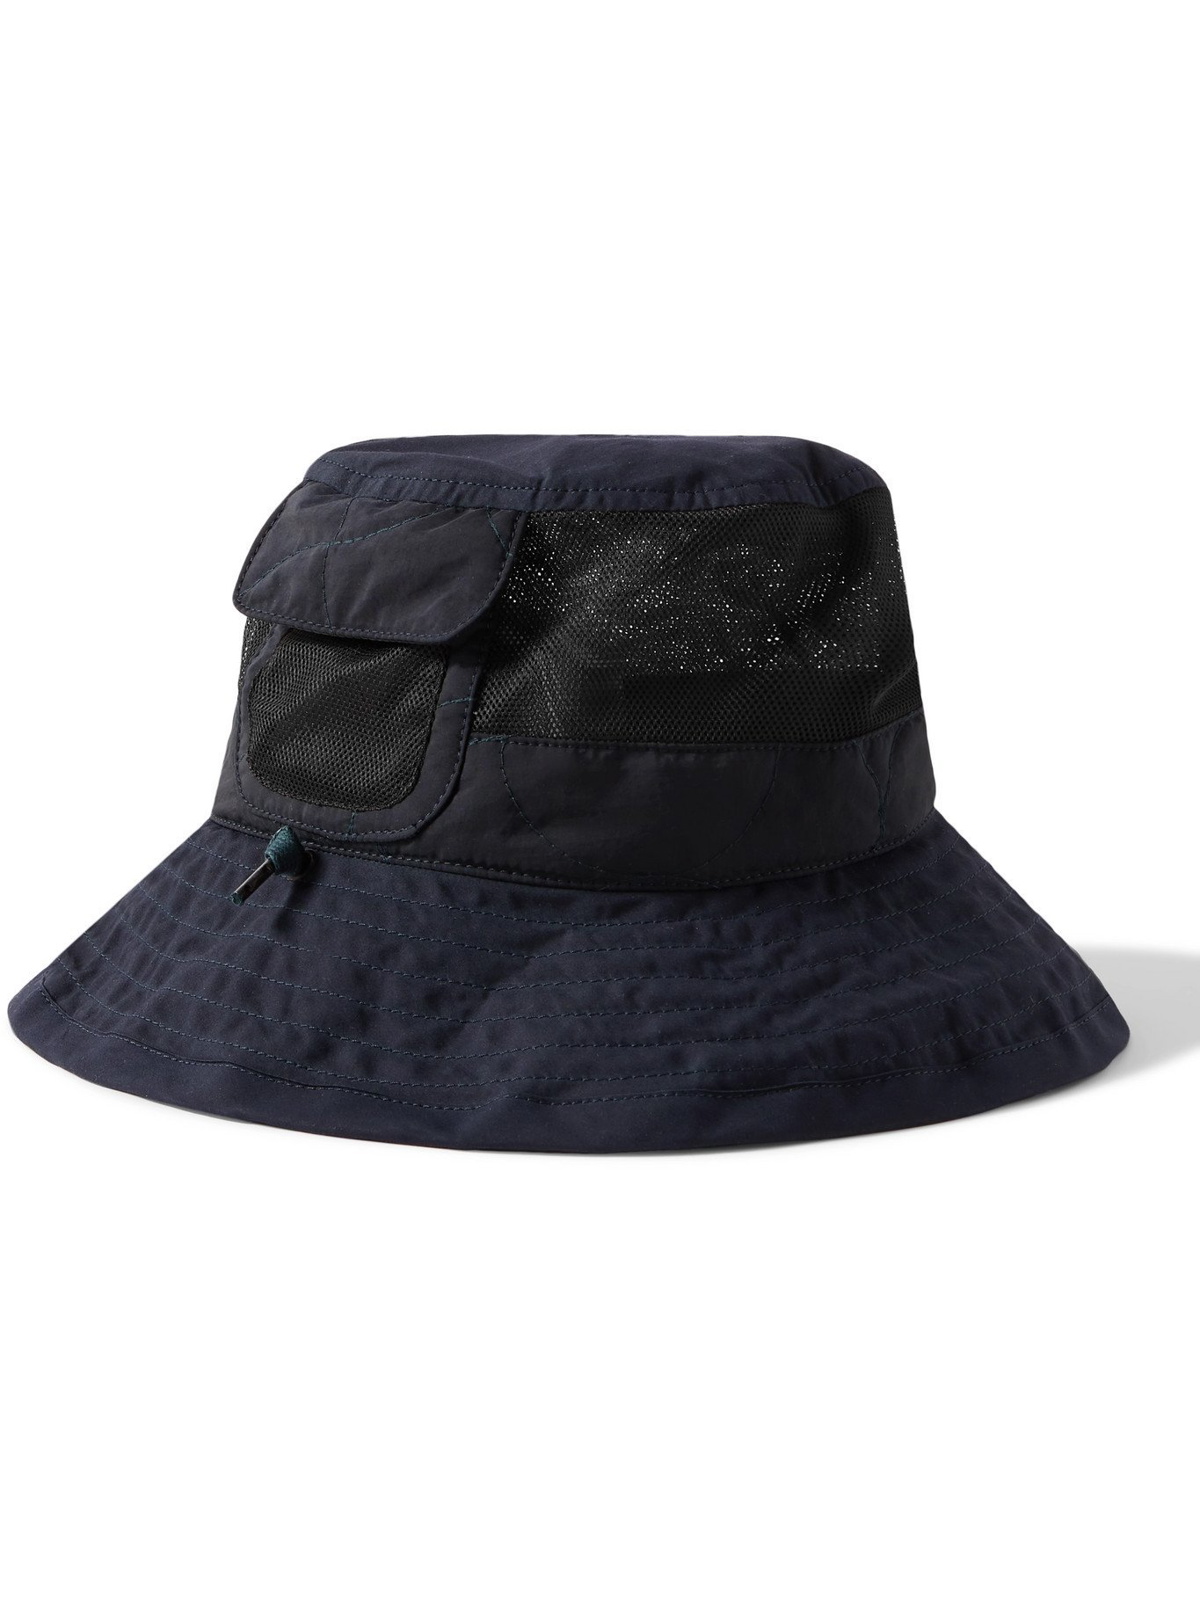 NICHOLAS DALEY - Lavenham Waxed Cotton and Mesh Bucket Hat ...